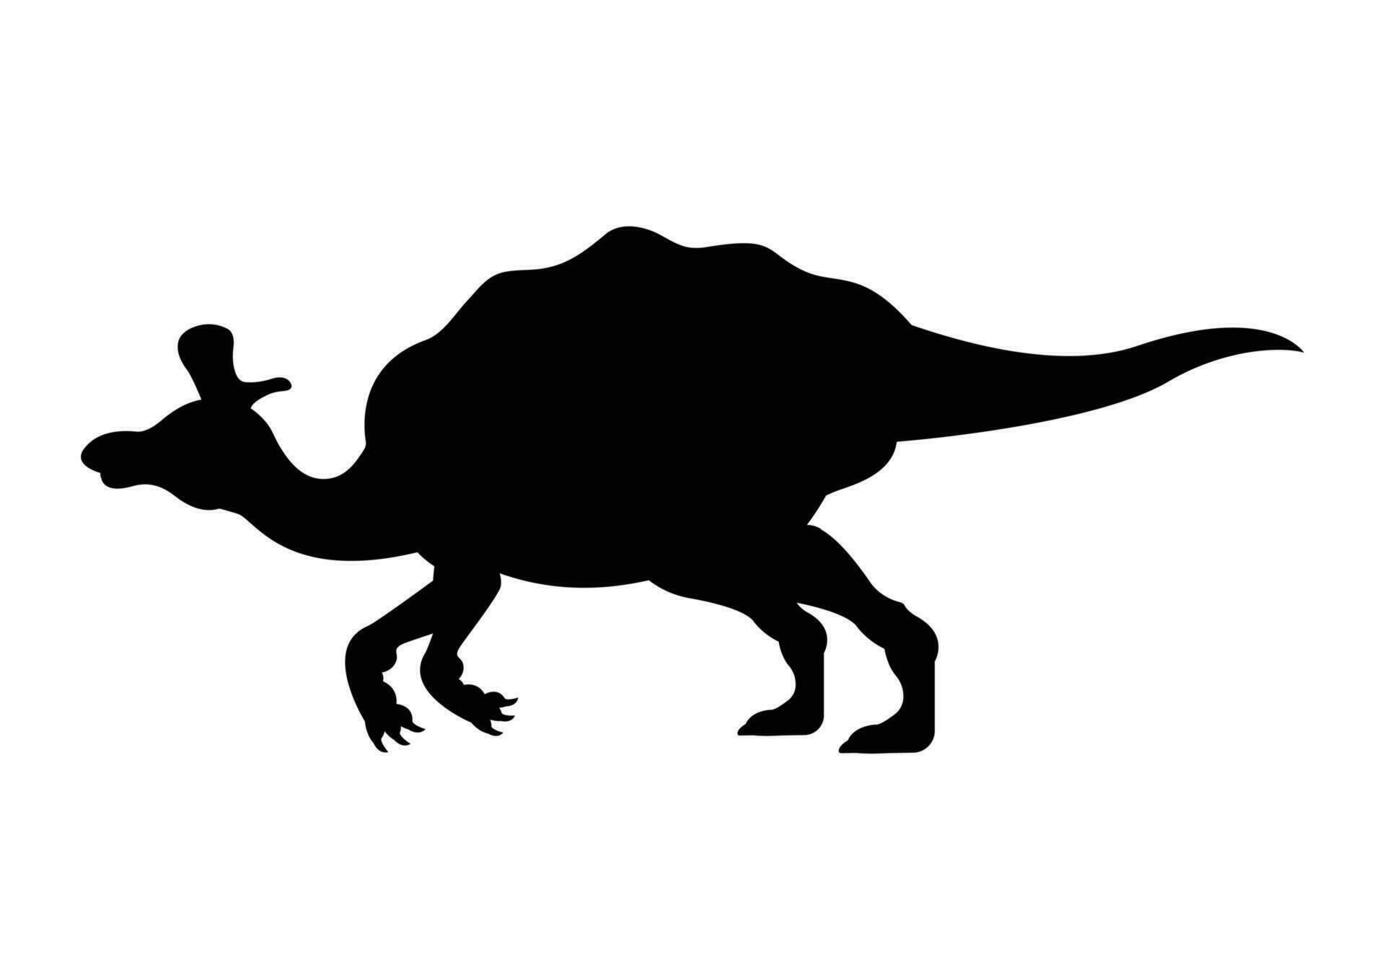 lambeossauro dinossauro silhueta vetor isolado em branco fundo